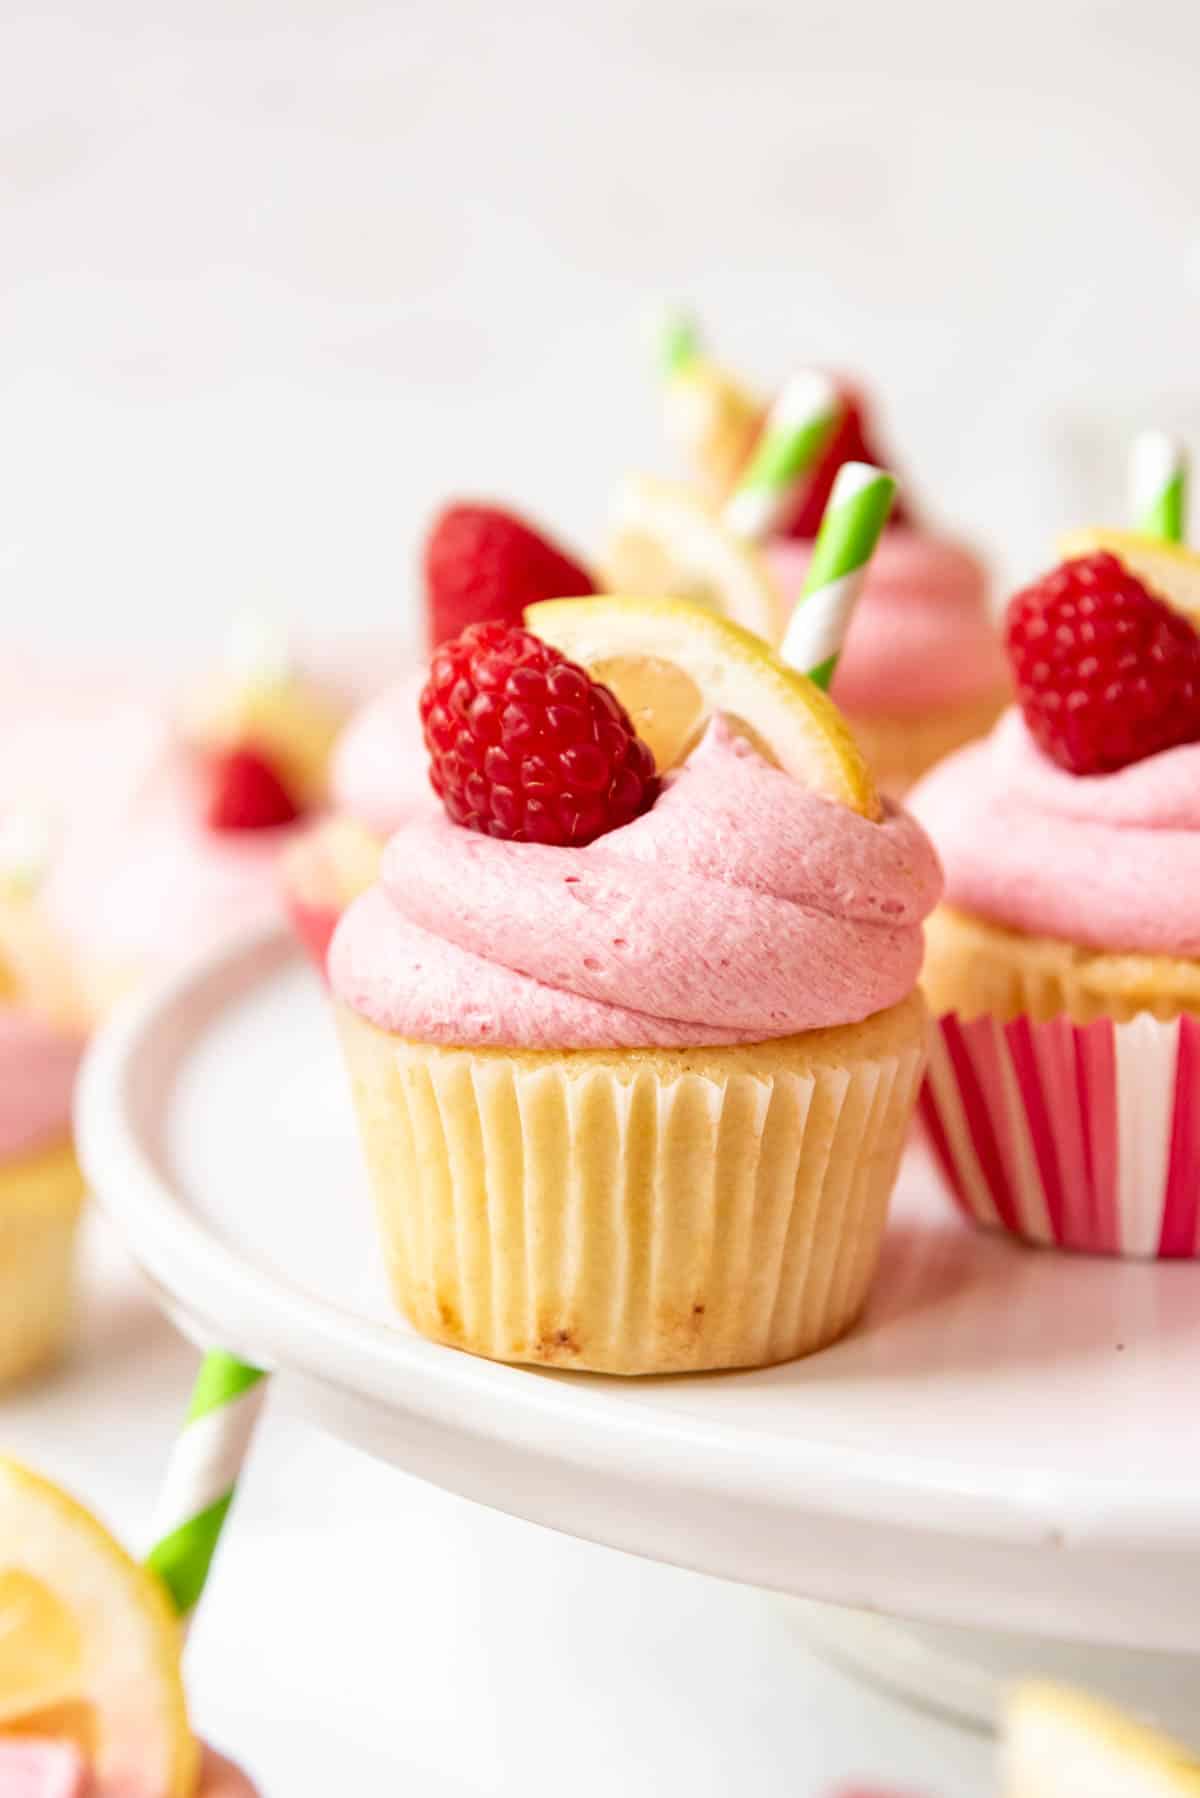 Raspberry lemonade cupcakes decorated with fresh raspberries, lemon slices, and straws.